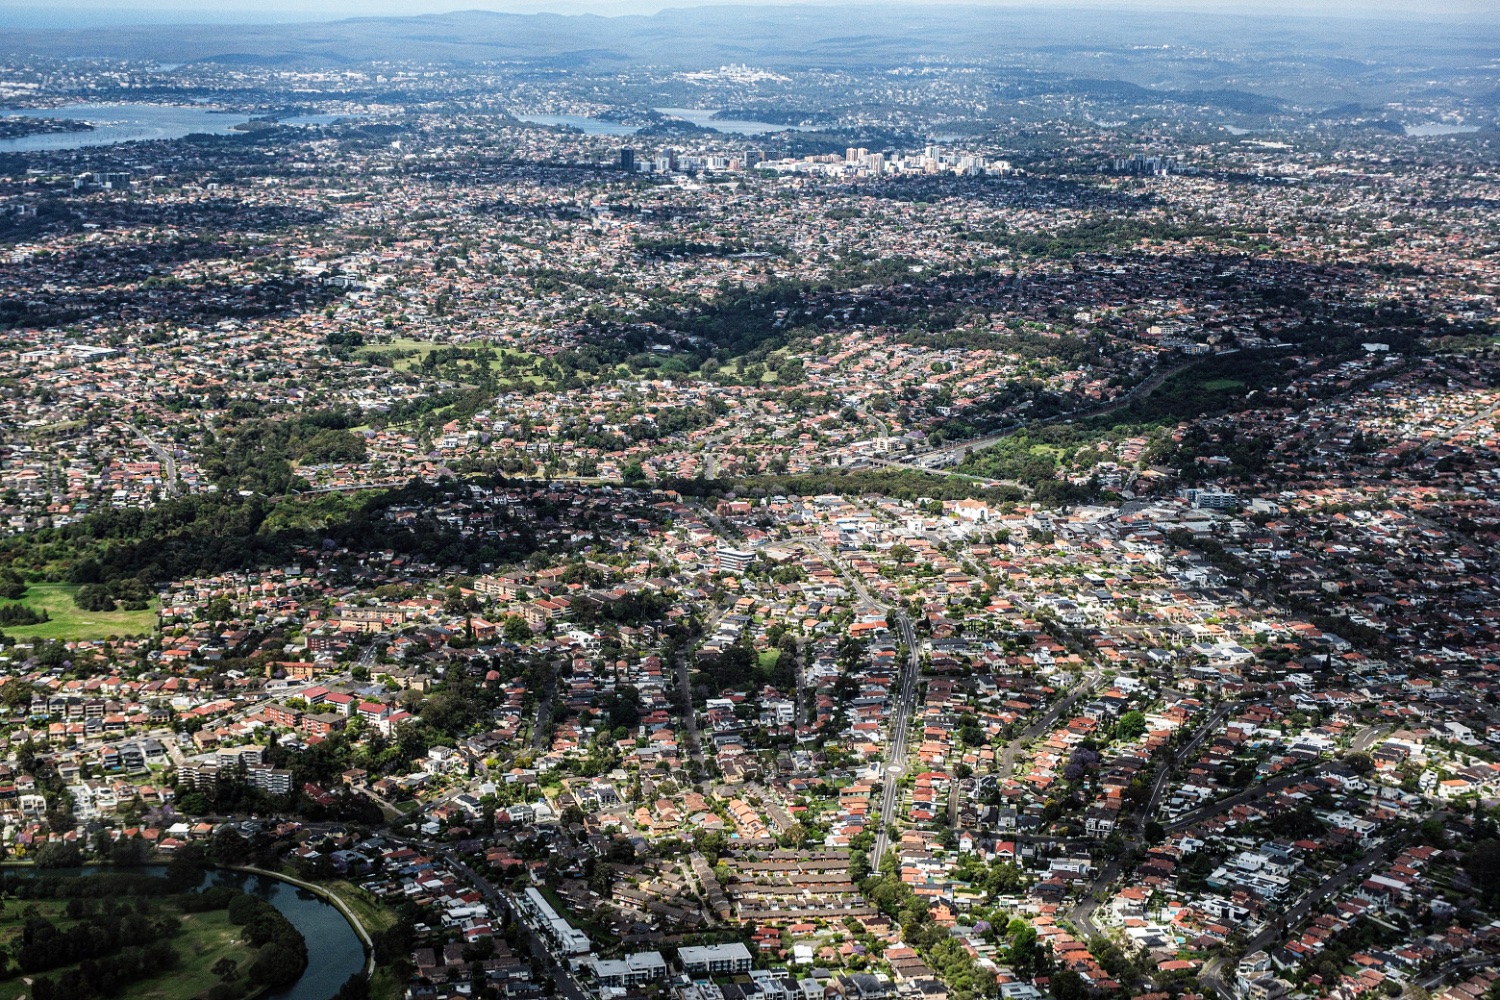 Sydney surroundings, aerial view